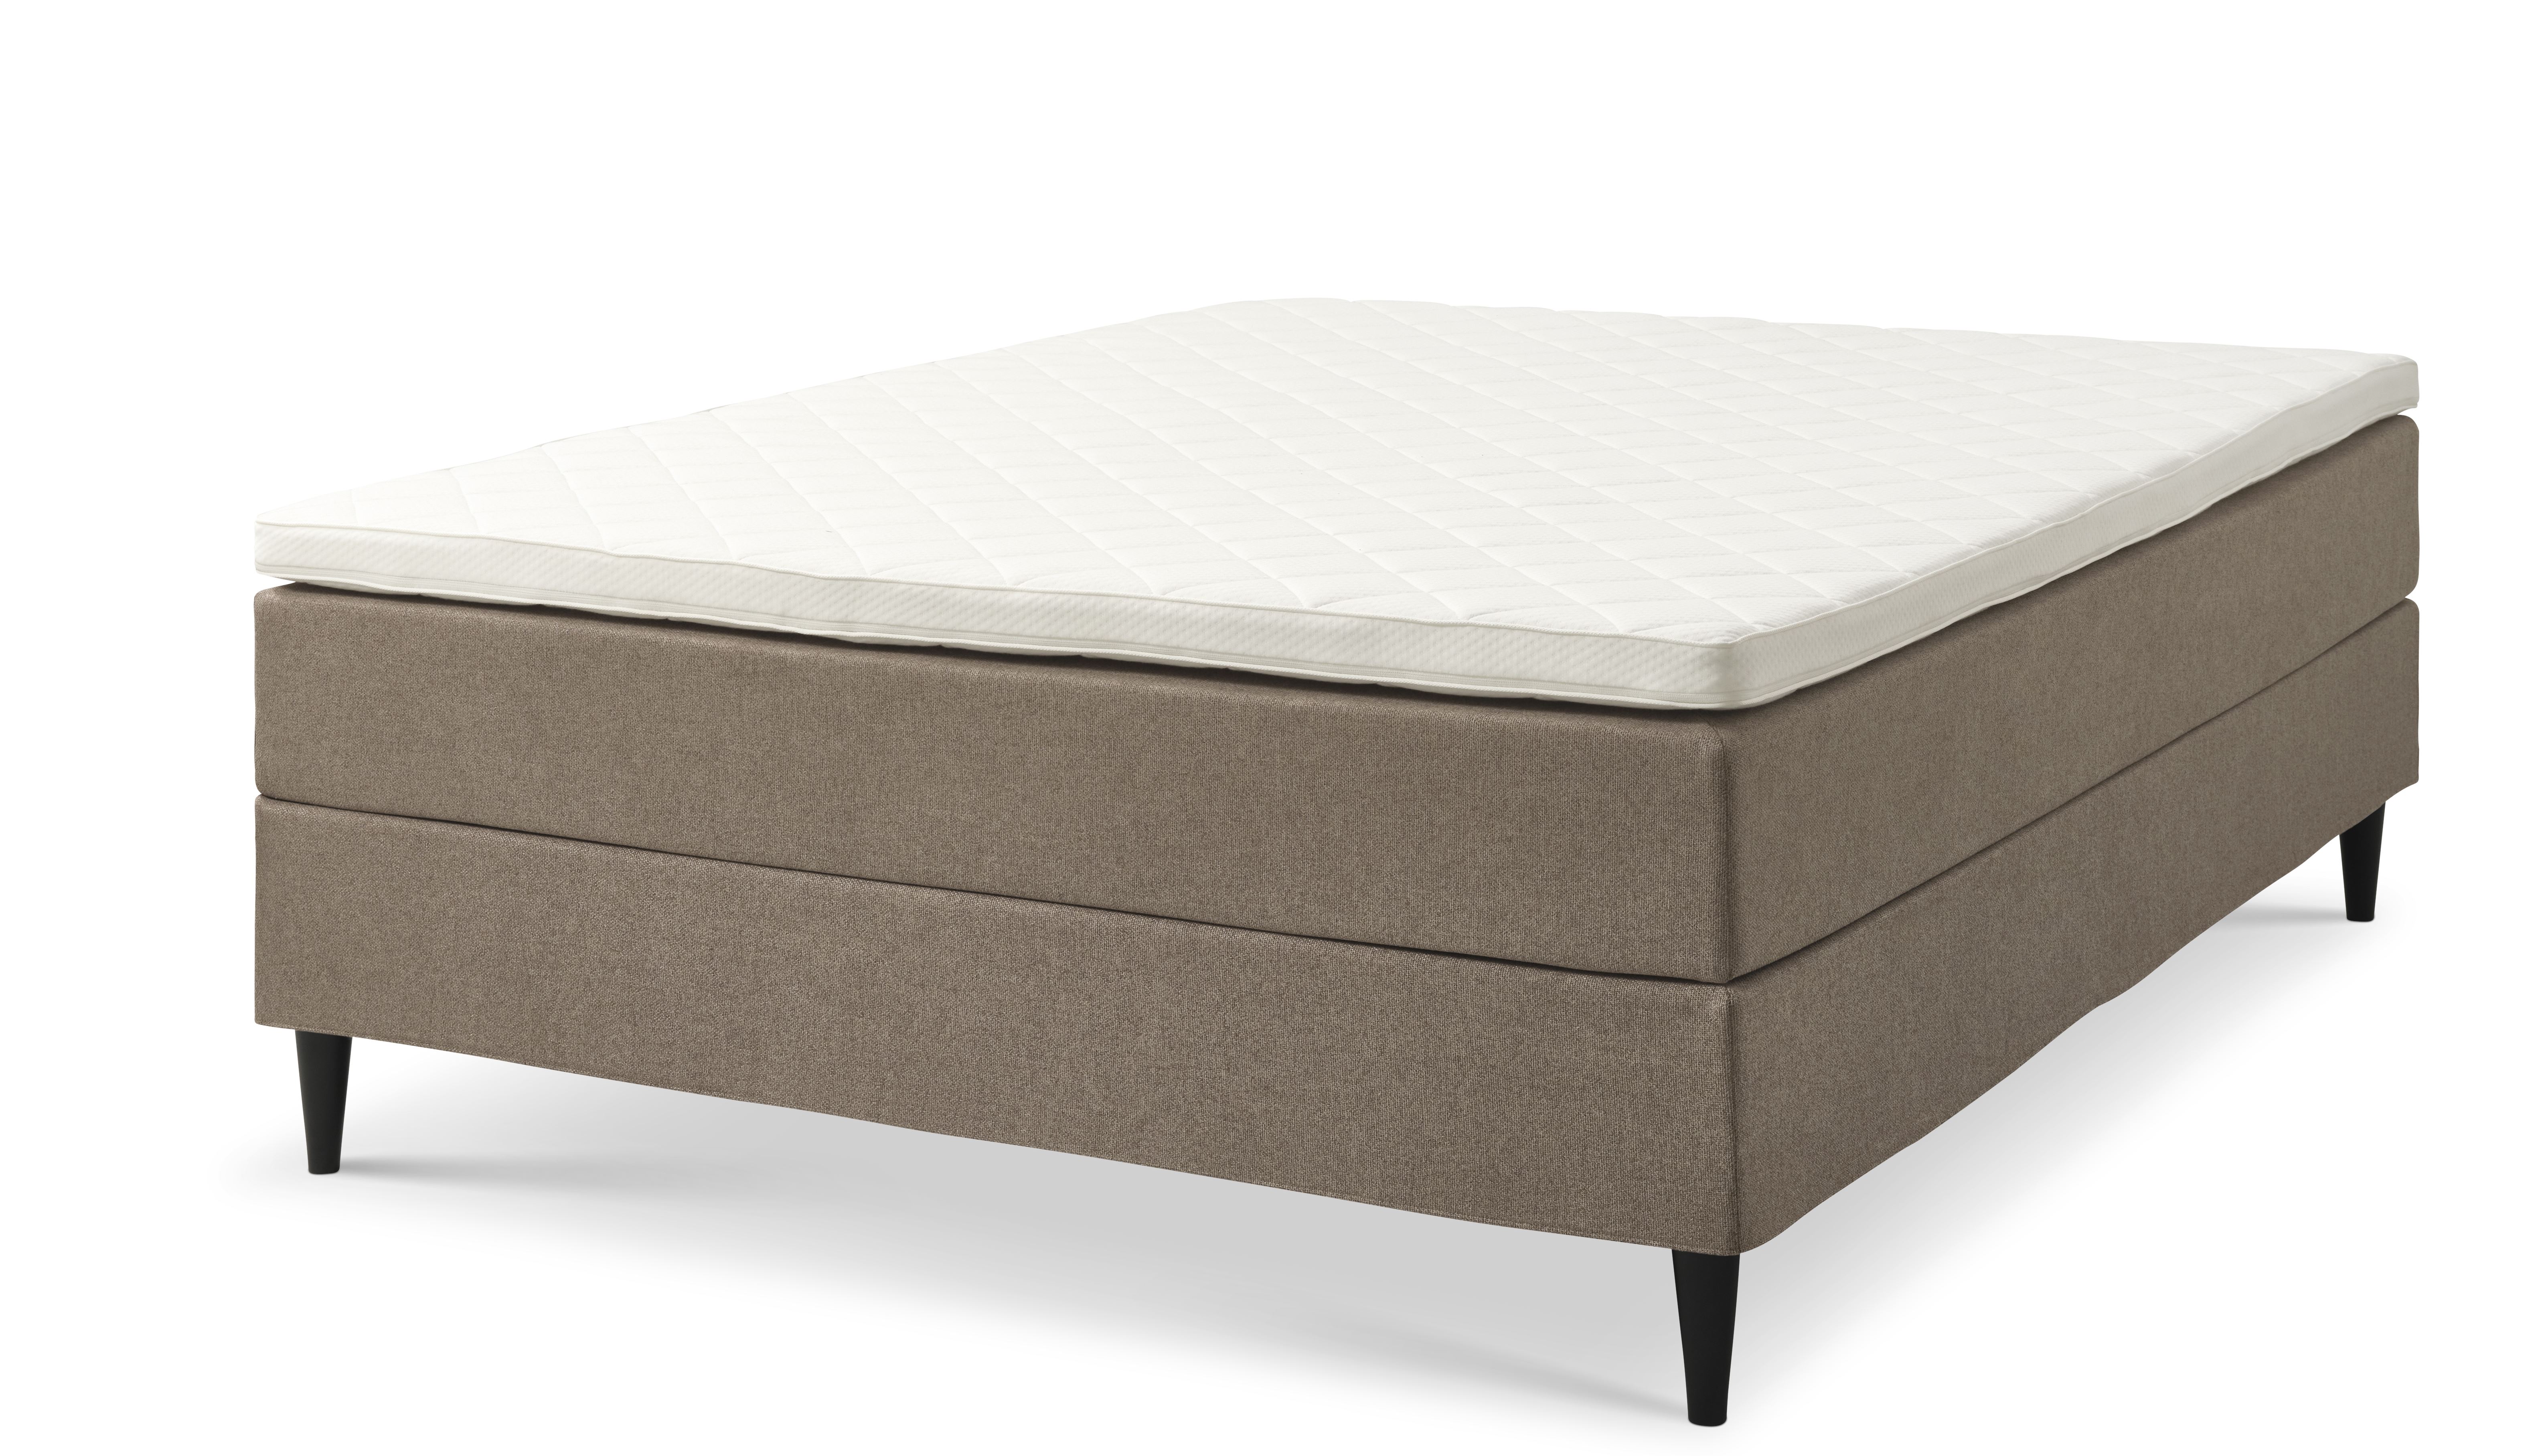 Comfort Plus Dreams sengebund, u. topmadras og u. ben - antelope beige polyester stof (200x160)